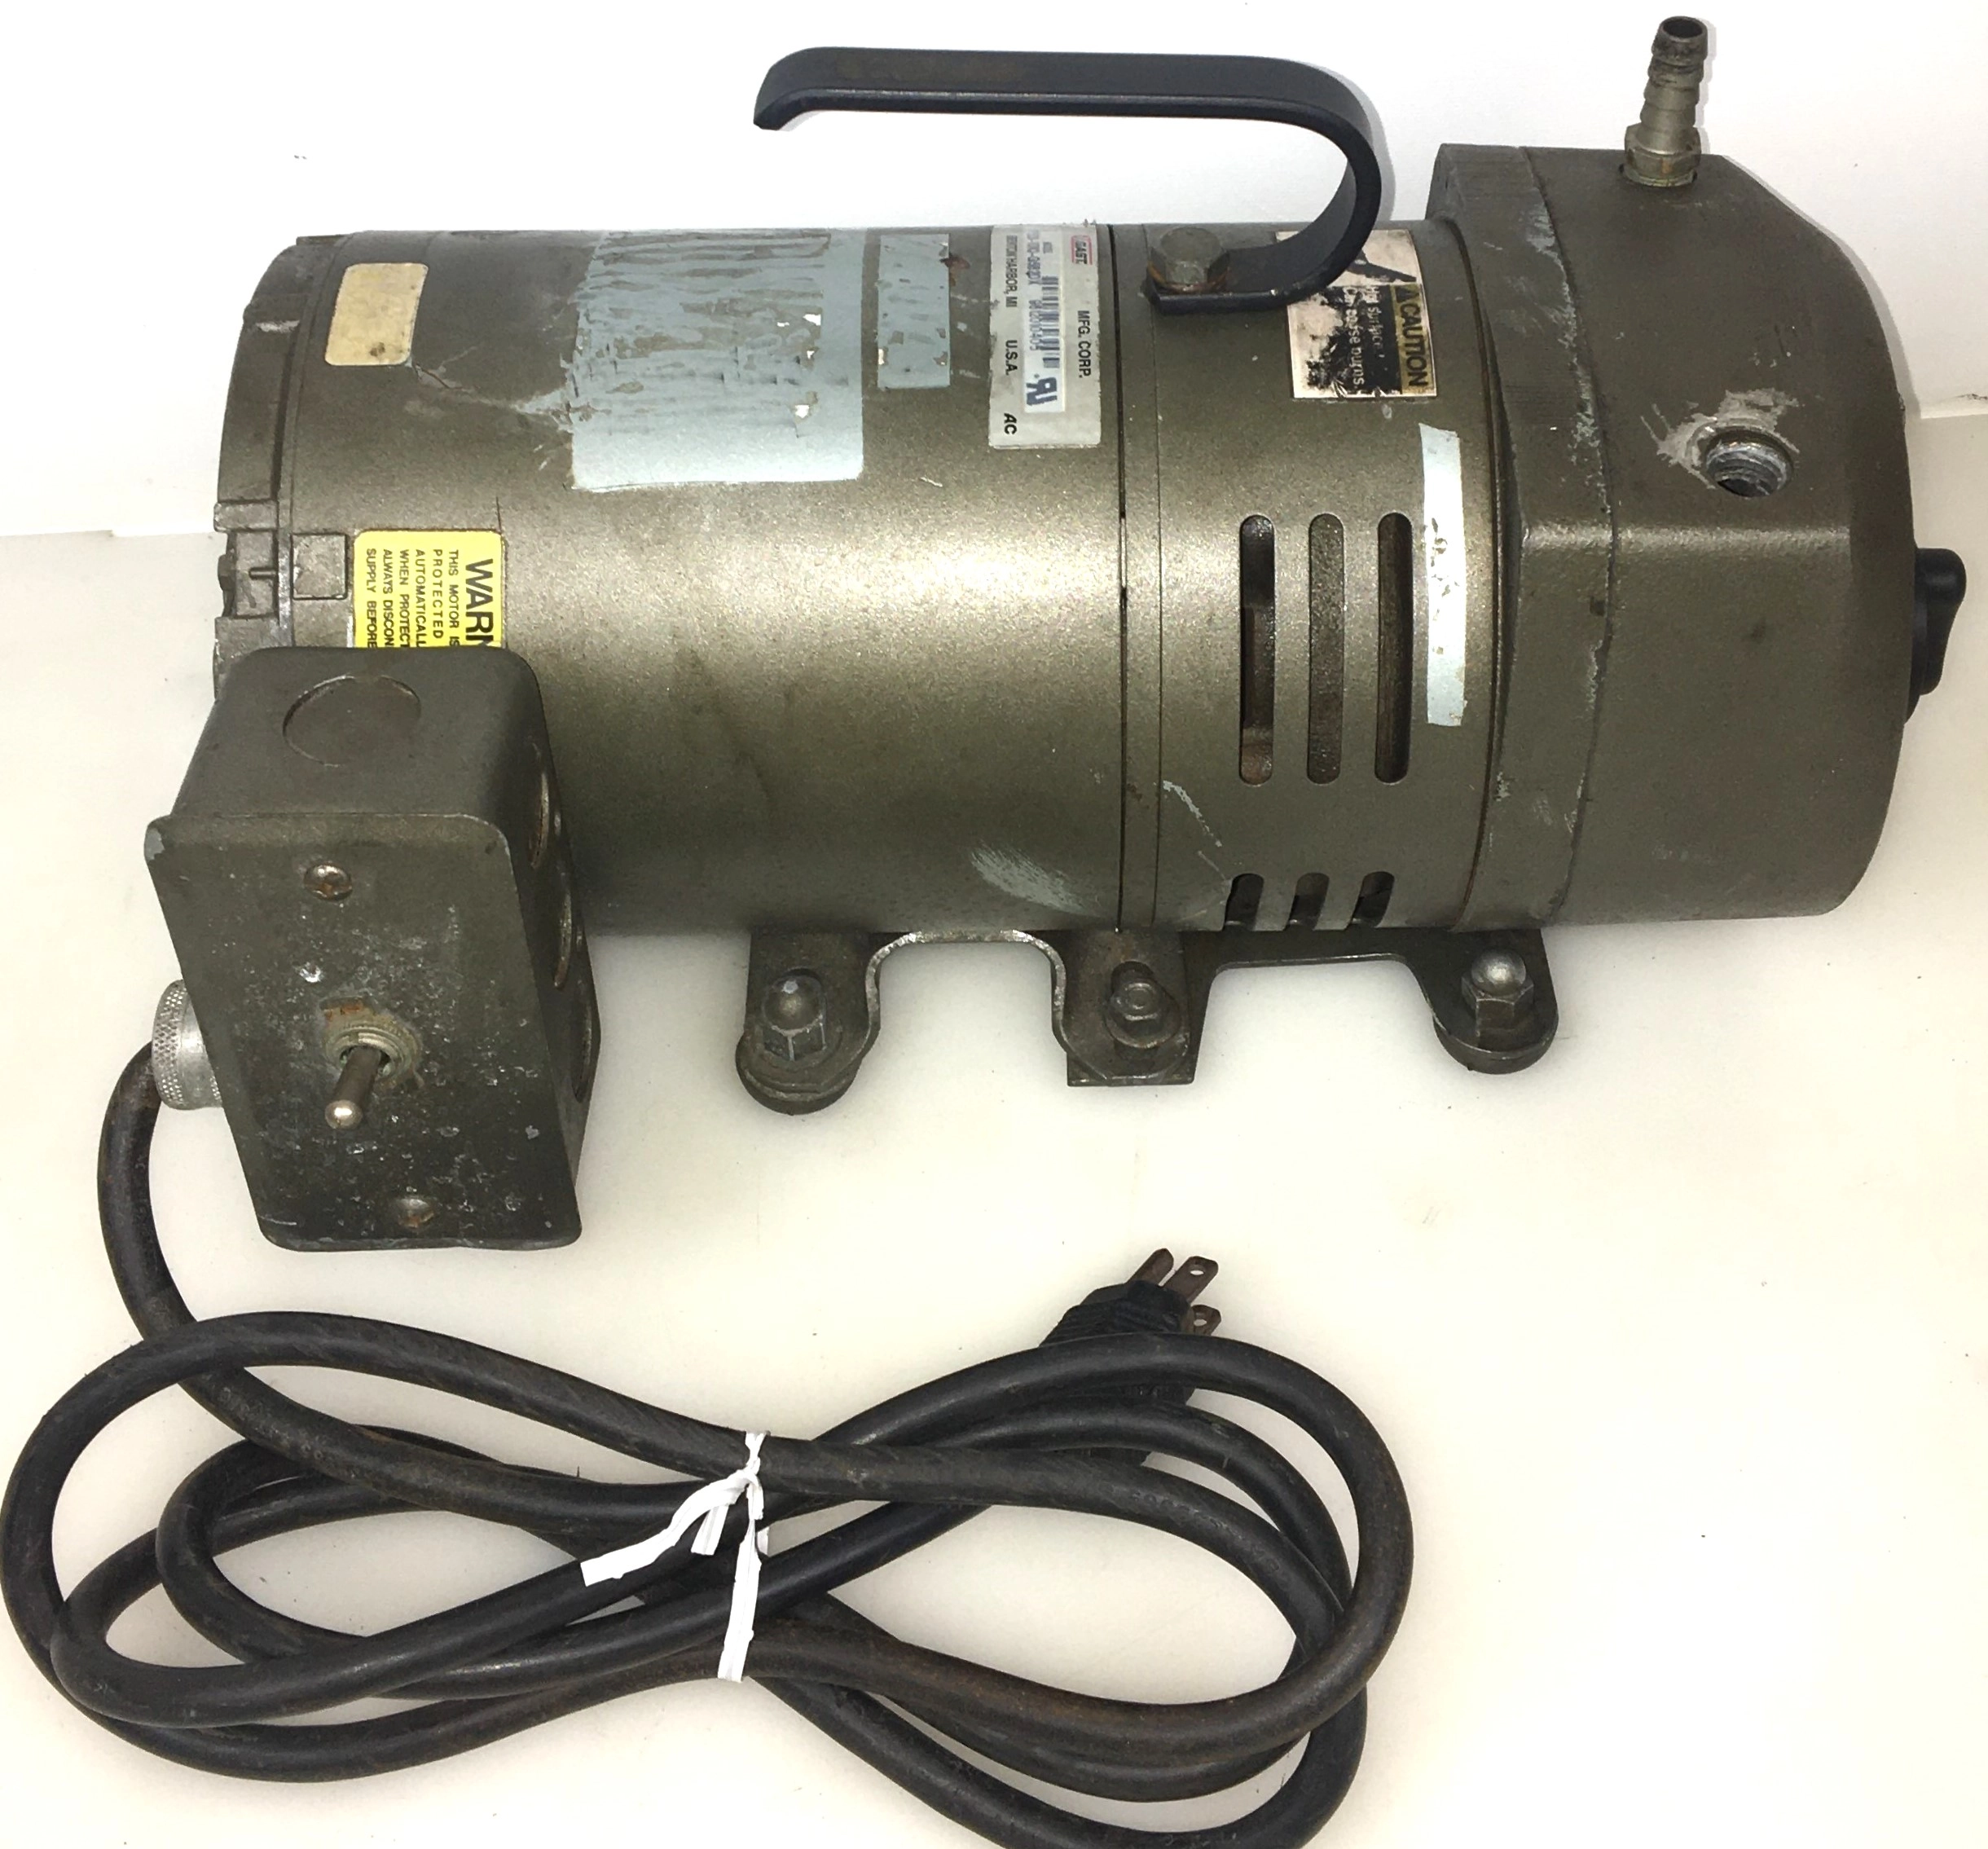 Gast 0523-101Q-G582DX Oil-Free Rotary Vacuum Pump - 5cfm